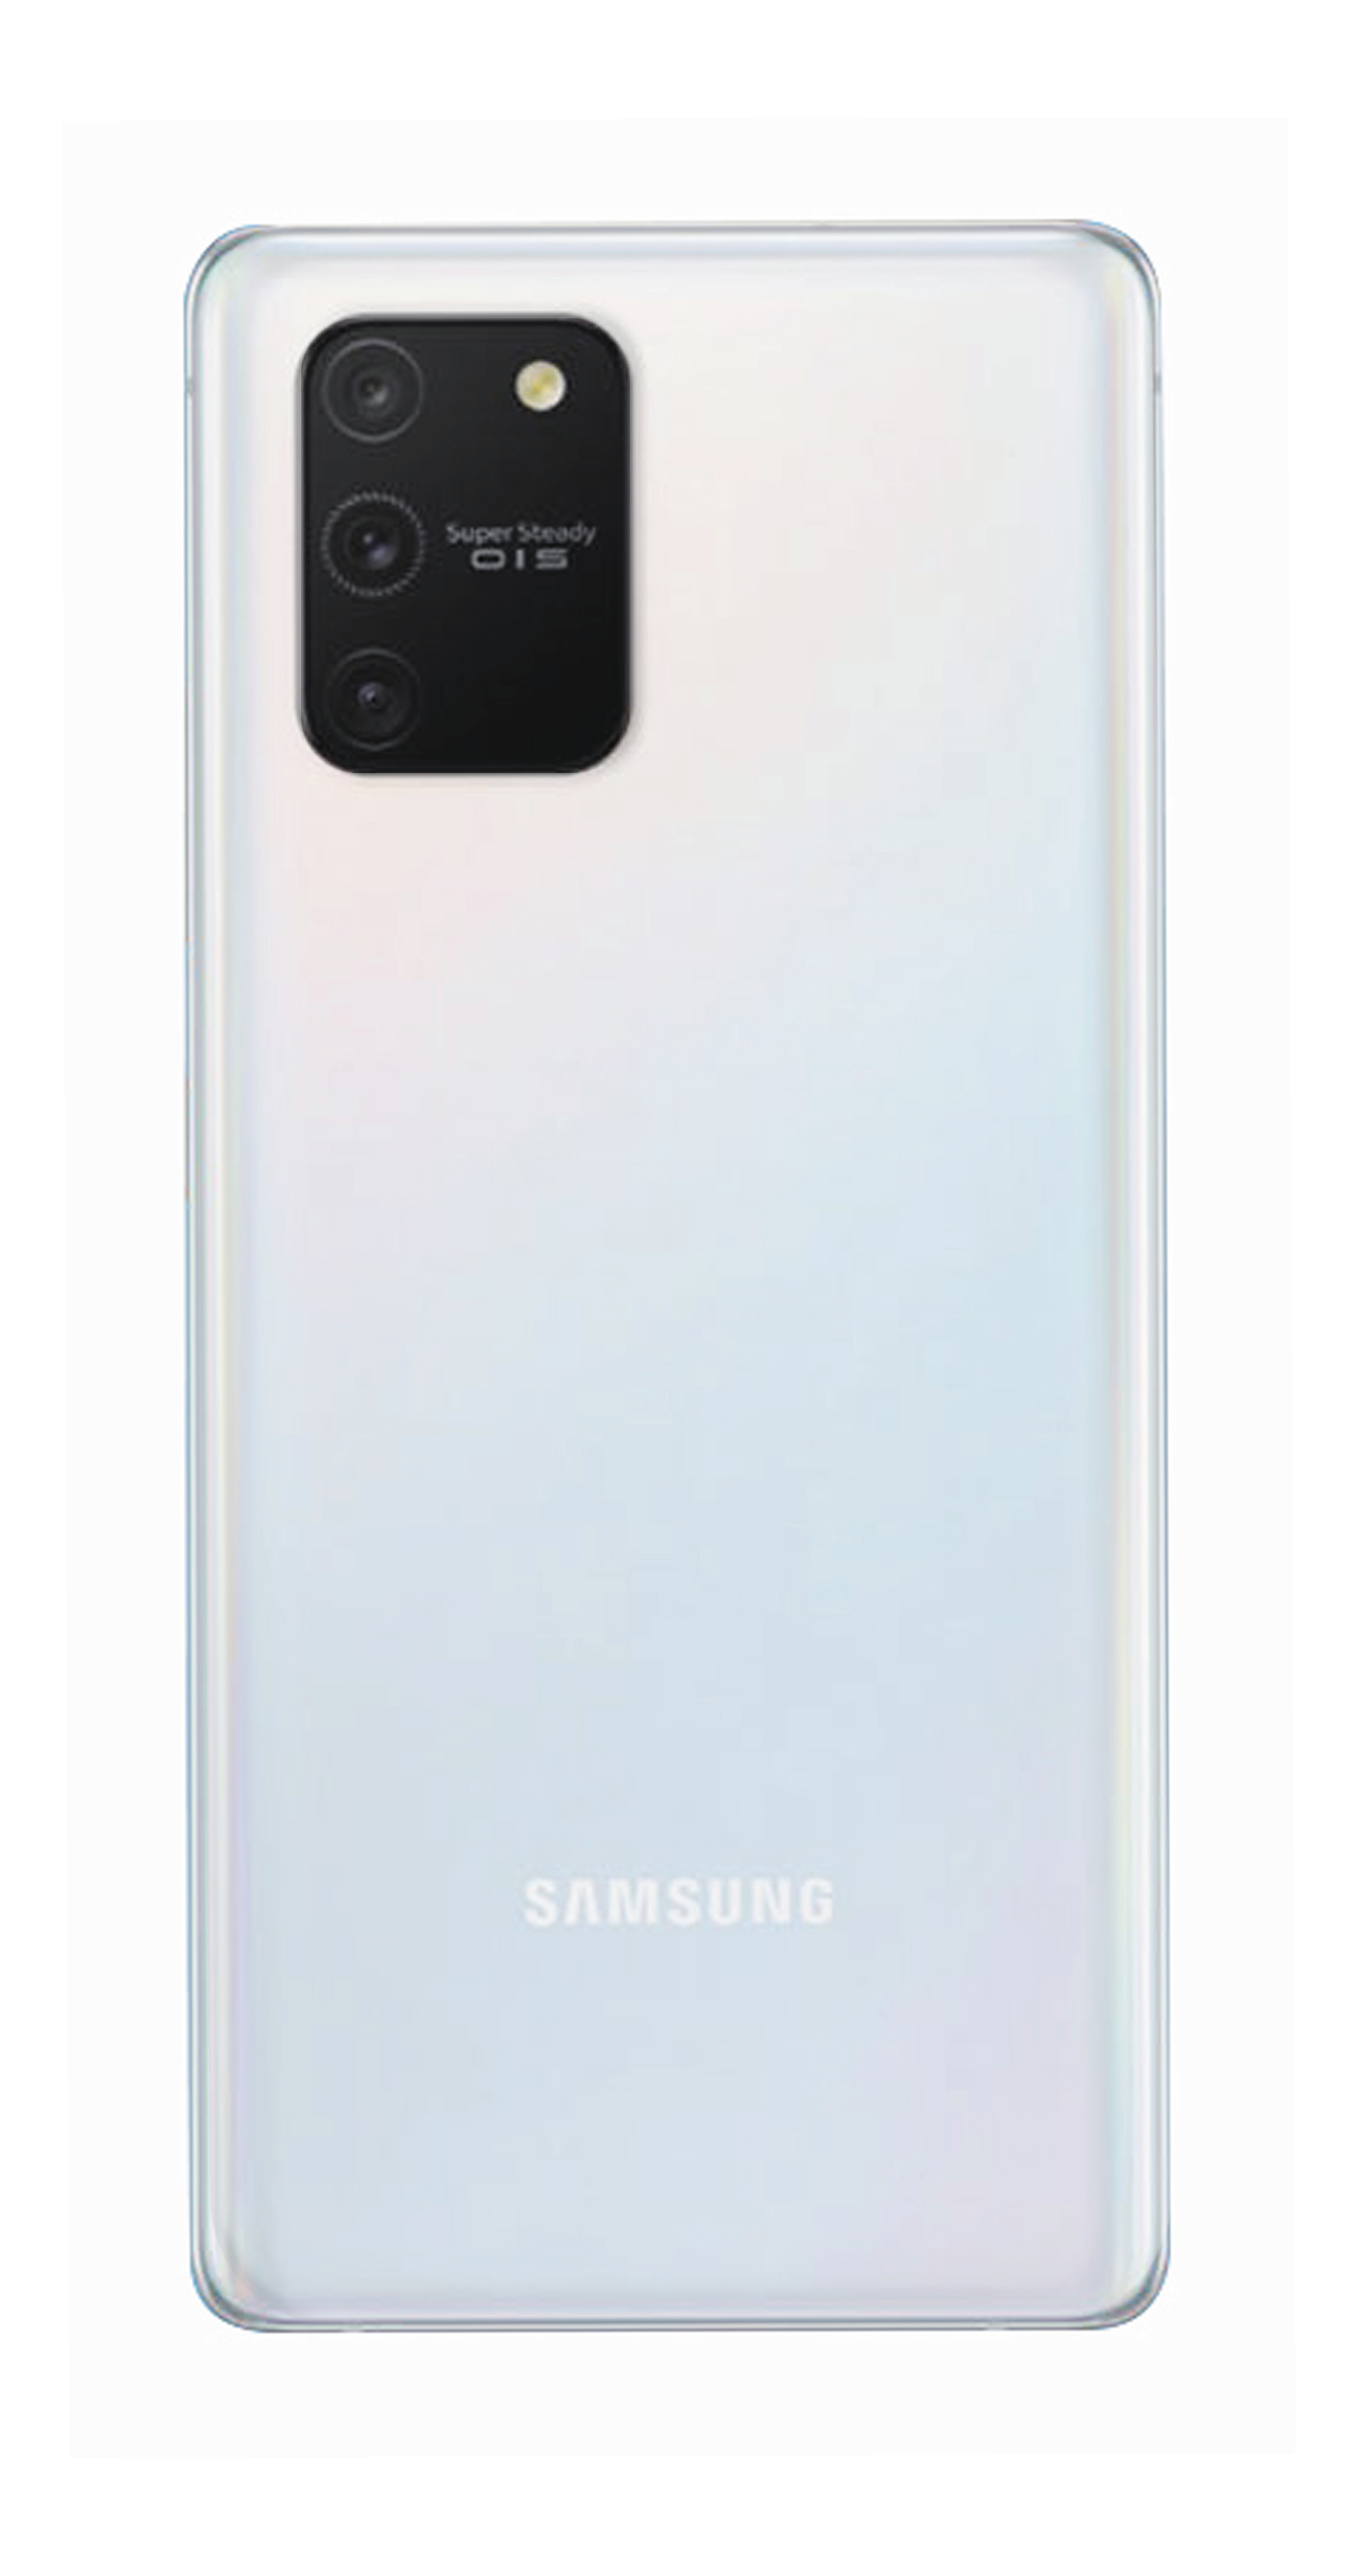 Case PURO 0.3 Nude, for Samsung Galaxy S10 Lite, transparent / SGS10LITE03NUDETR